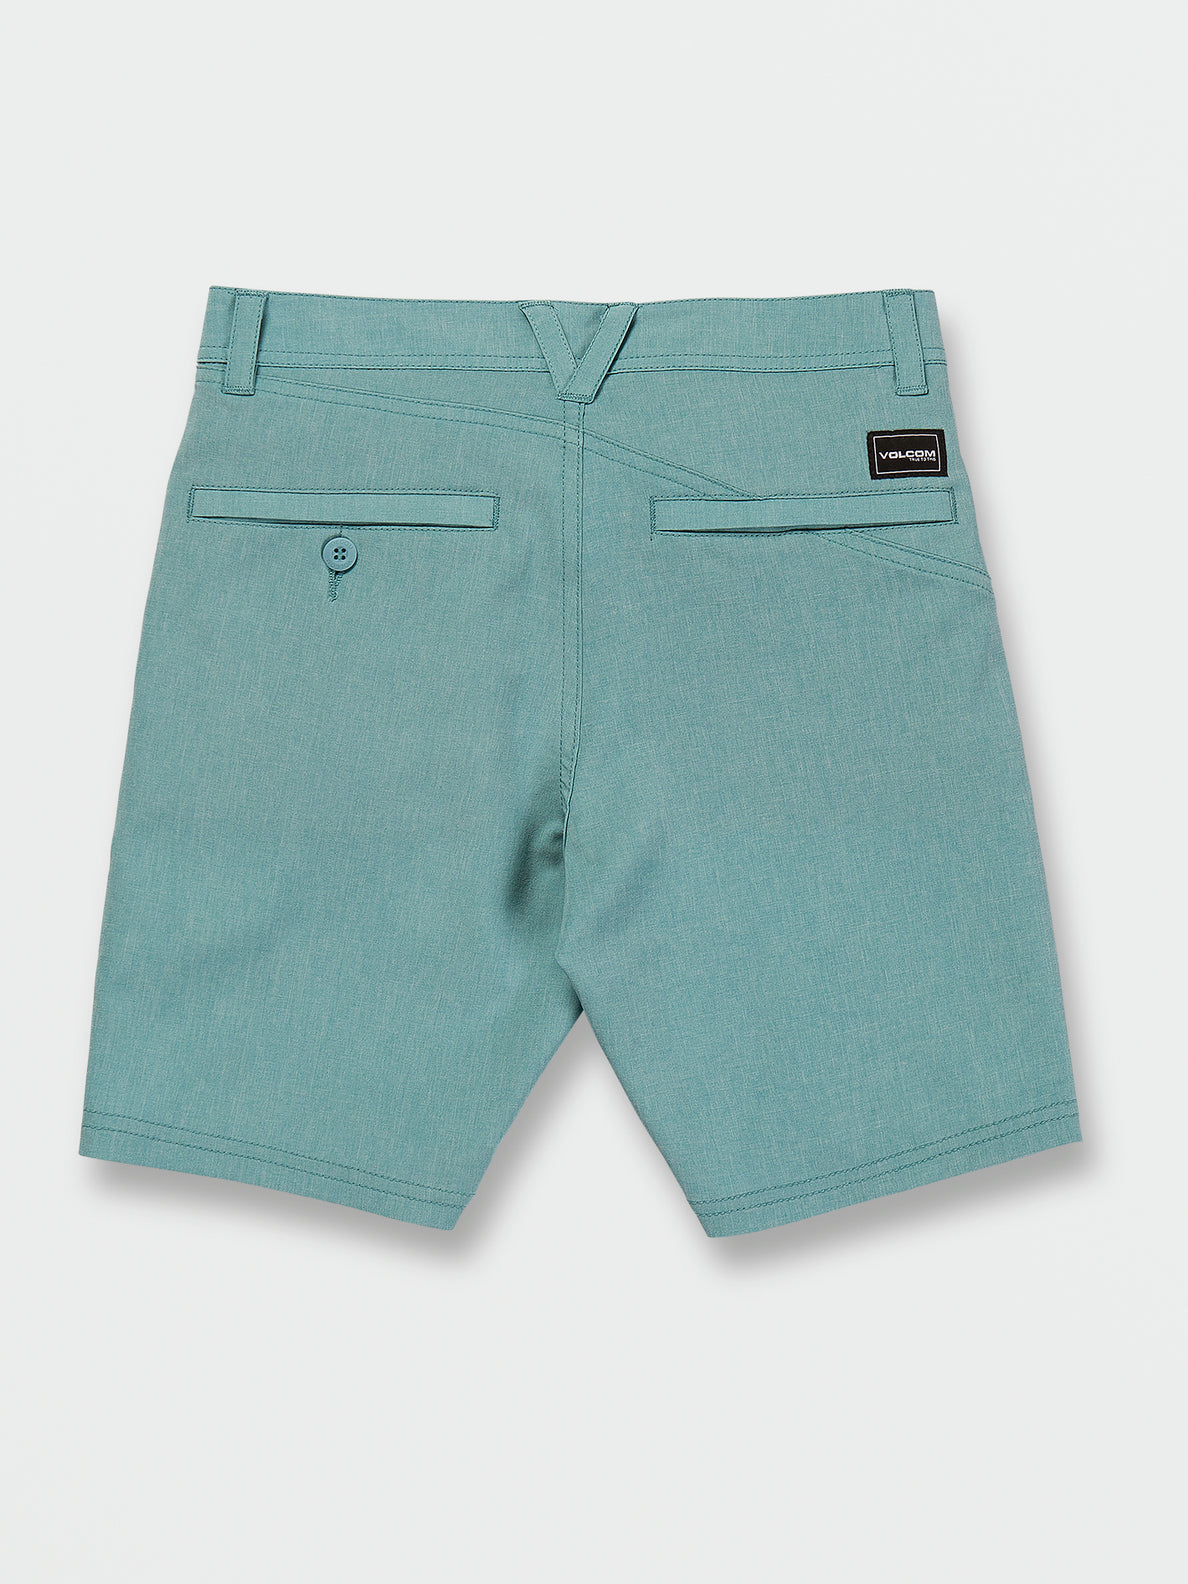 Big Boys Frickin Cross Shred Static Shorts - Cali Blue Heather (C3212306_CBL) [B]